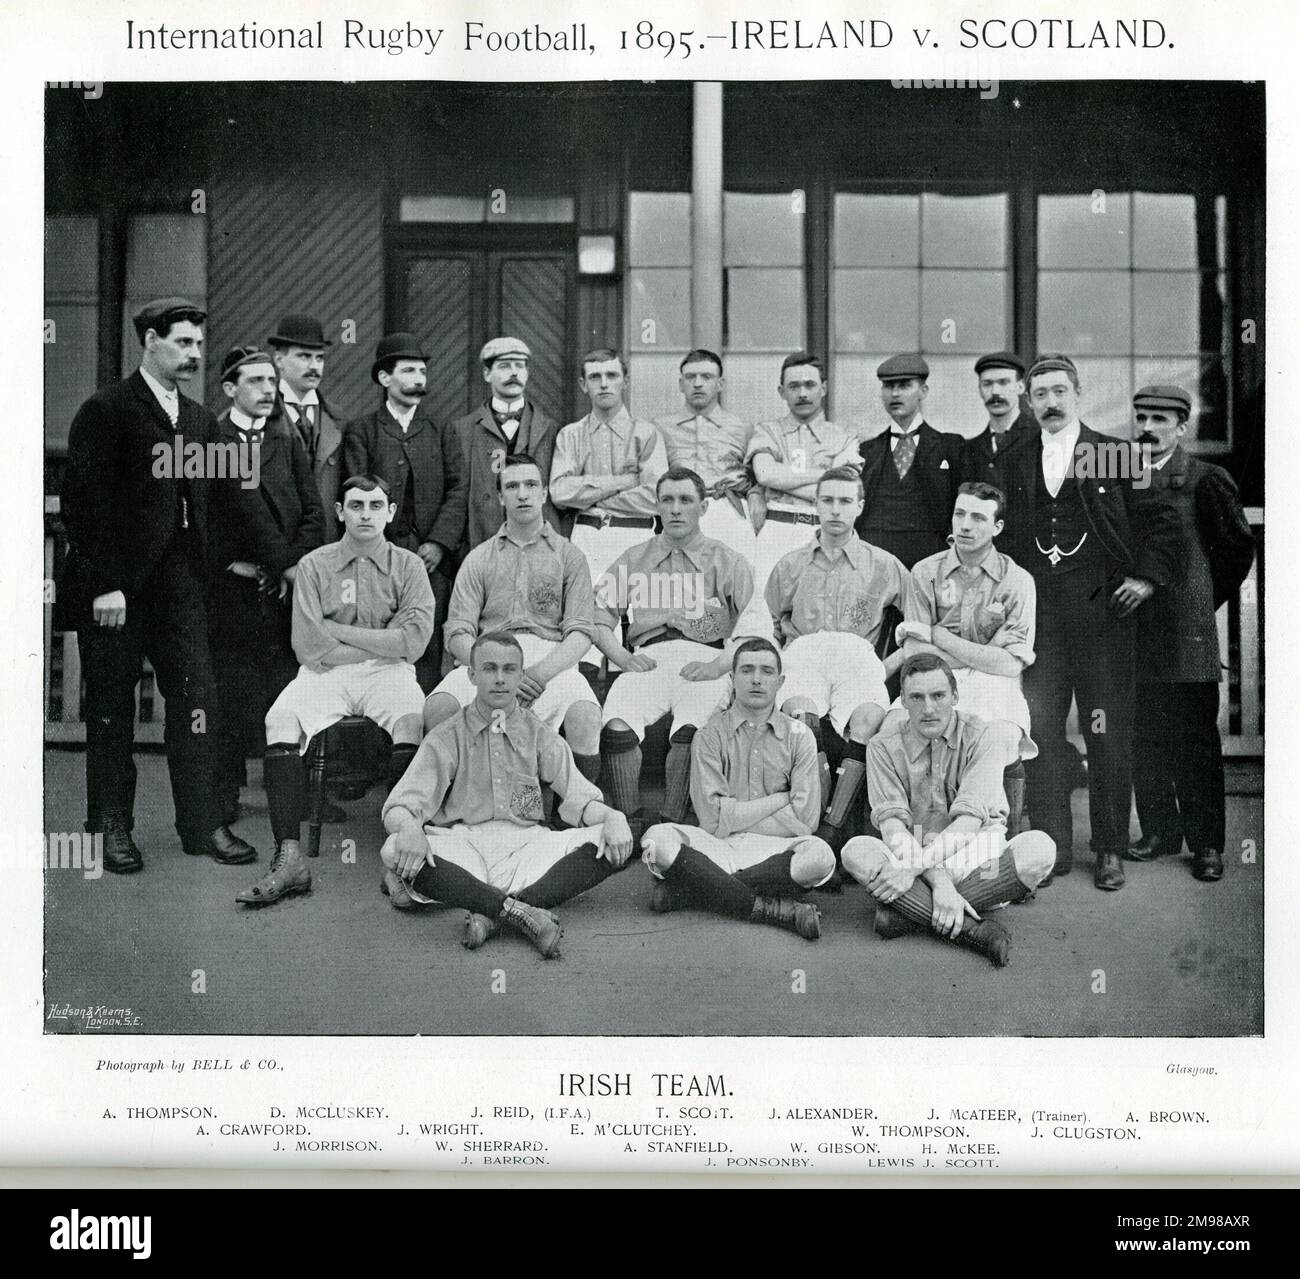 Irish International Rugby Team, 1895 anni, all'epoca giocarono in Scozia: Thompson, McCluskey, Reid (IFA), Scott, Alexander, McAteer (Trainer), Brown, Crawford, Wright, M'Clutchey, Thompson, Clugston, Morrison, Sherrard, Stanfield, Gibson, McKee, Barron, Ponsonby, Scott. Foto Stock